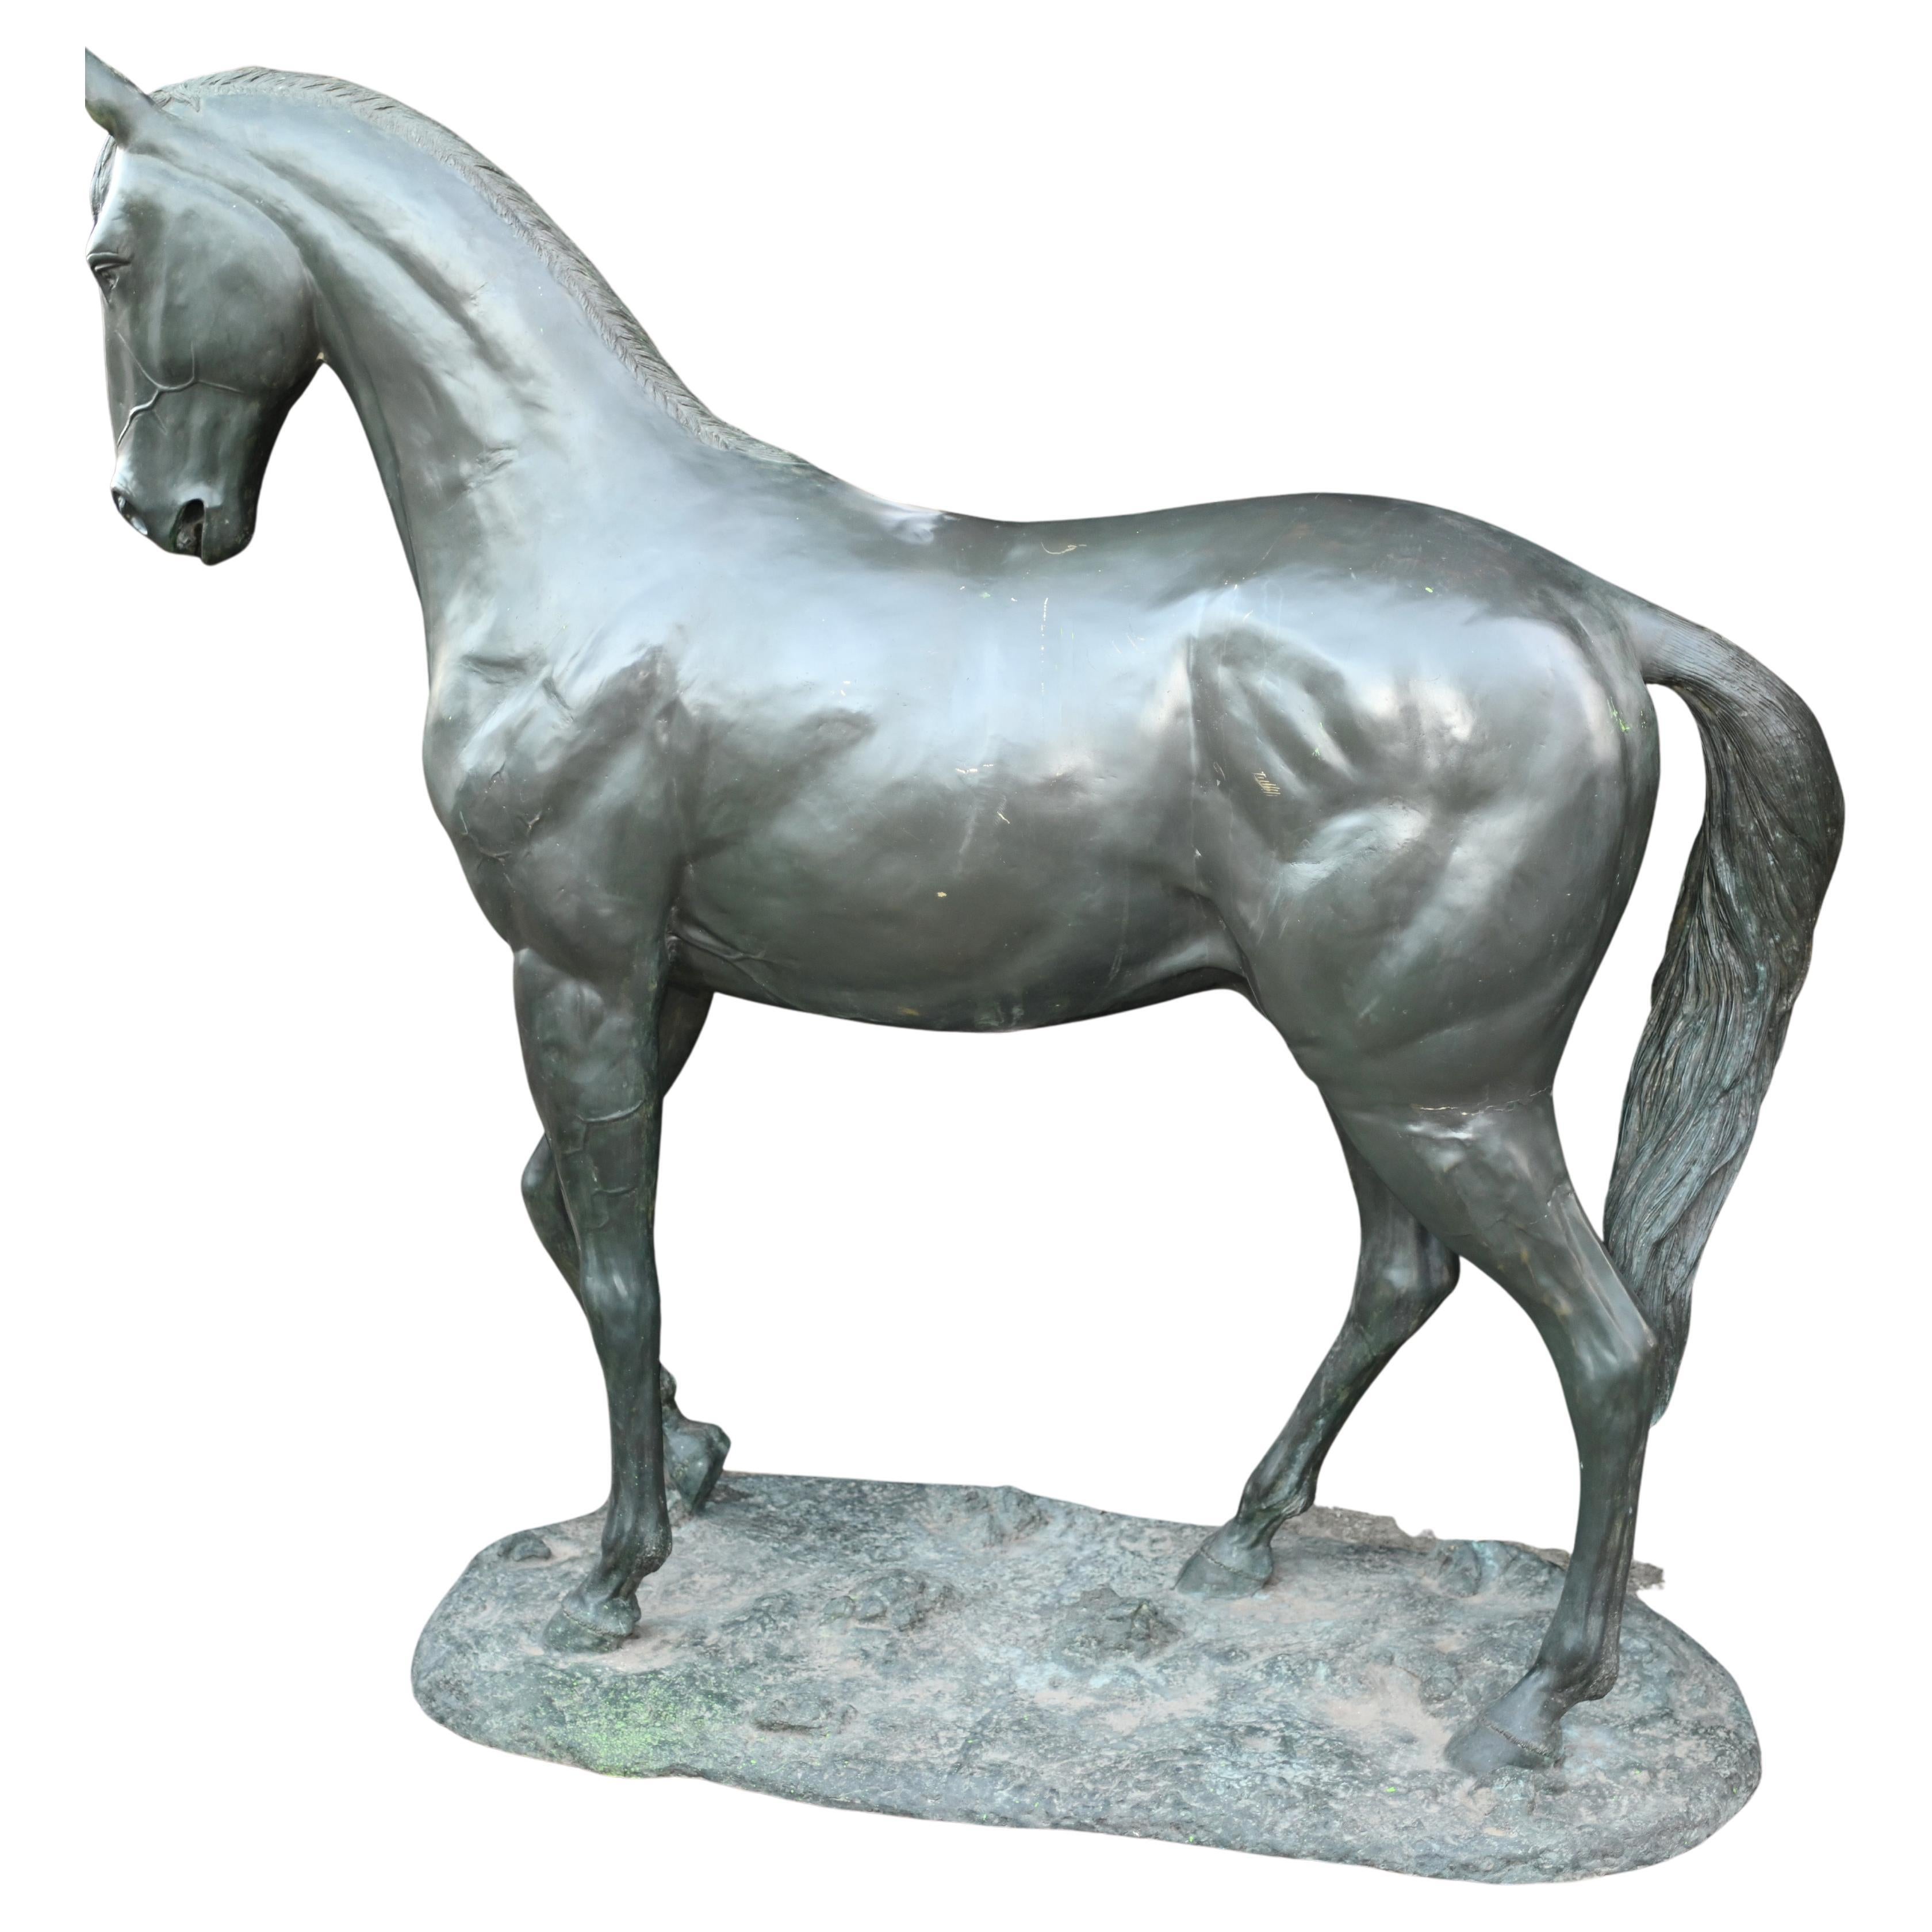 Statue de cheval grandeur nature en bronze, sculpture de jardin équestre en vente